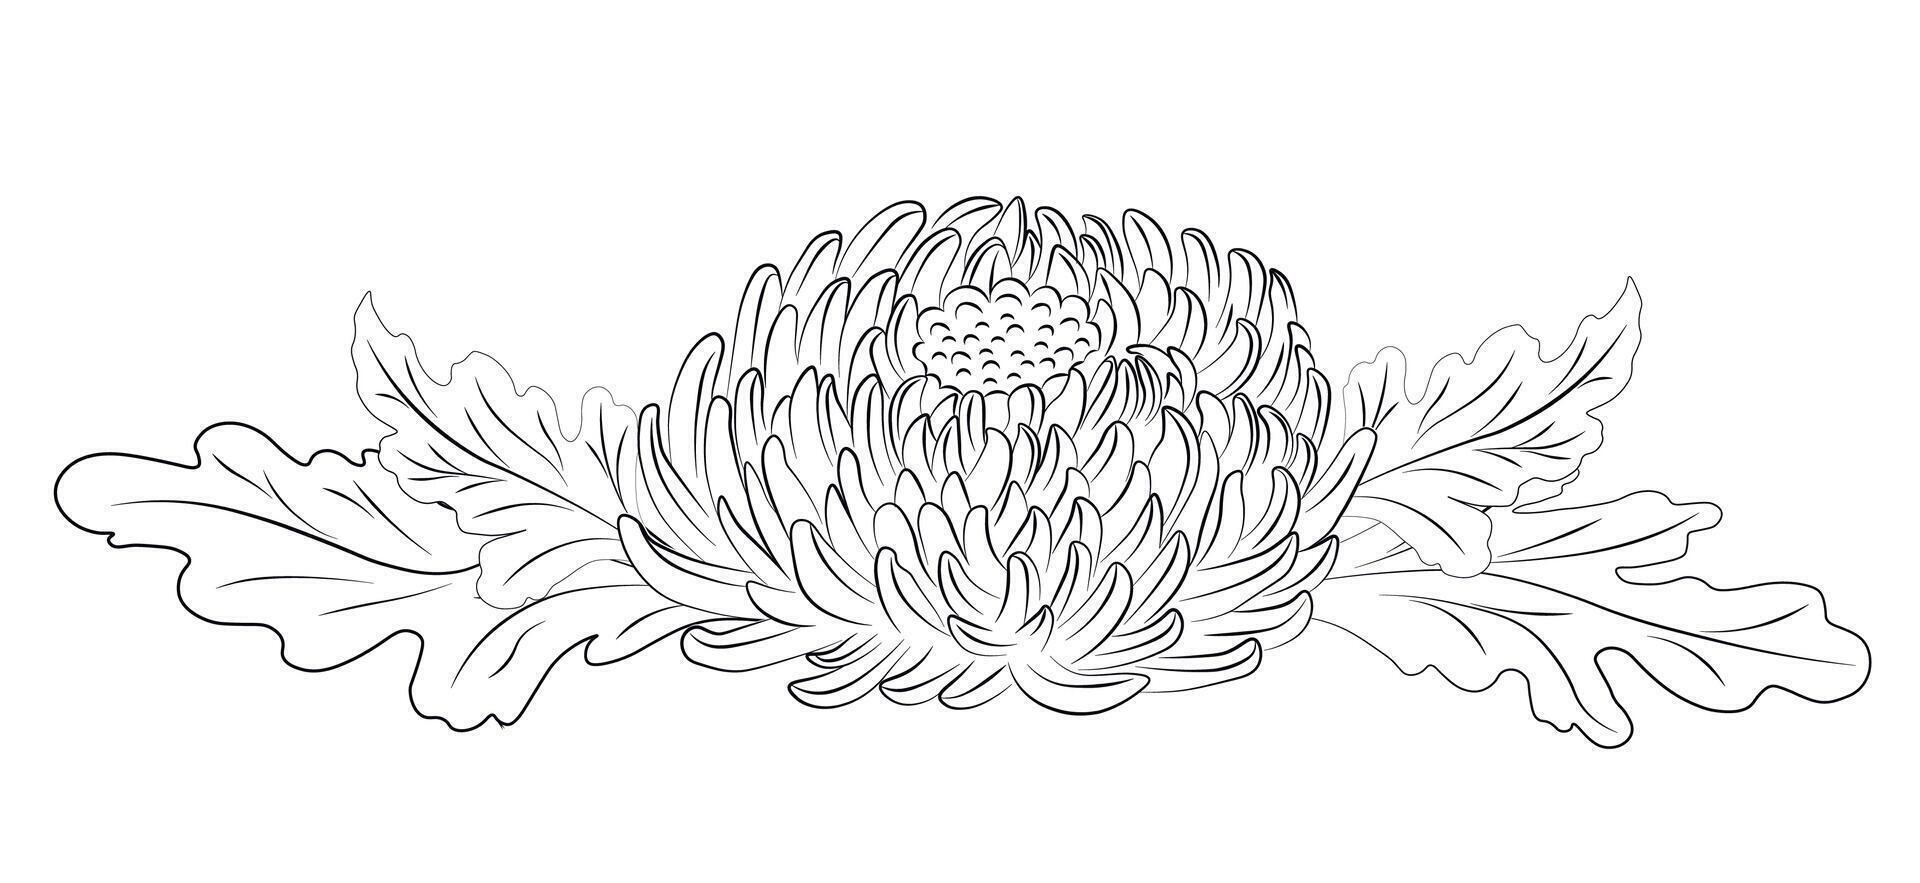 svart och vit linje illustration av krysantemum blommor på en vit bakgrund. blomma krysantemum vektor stock illustration. isolerat på vit